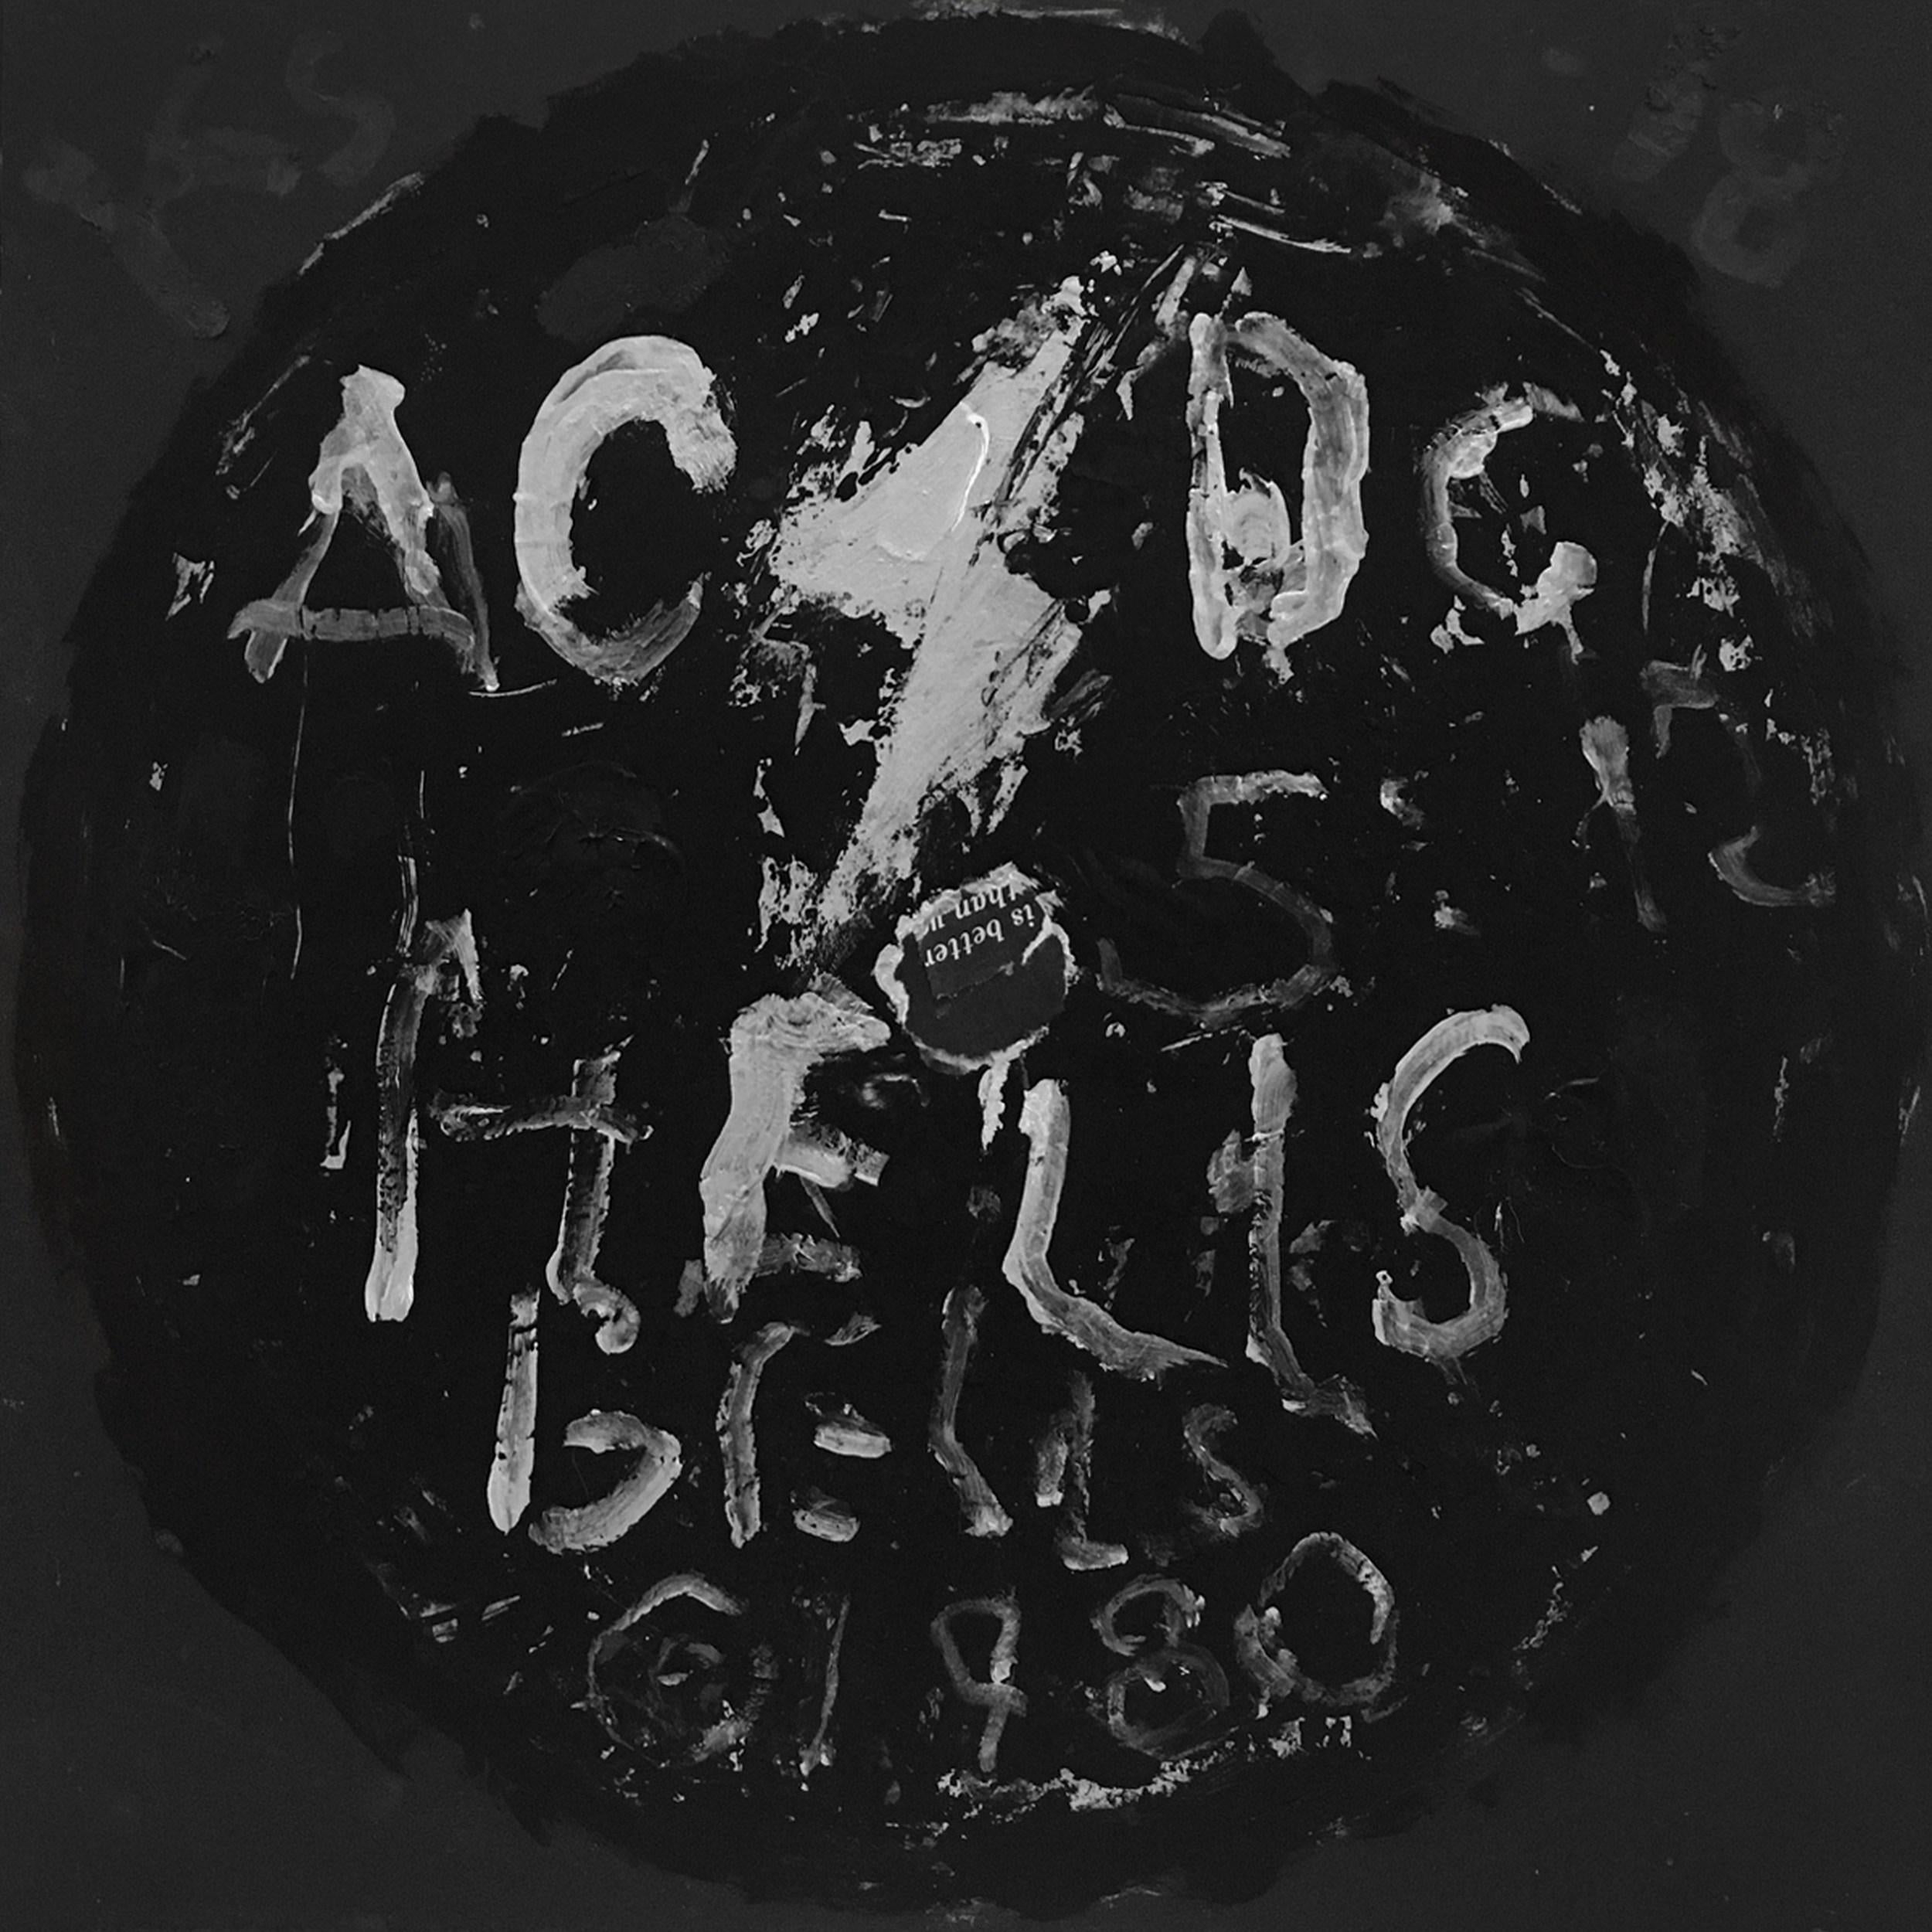 AC/DC - Hells Bells (Record Label, Ticket Stubs, Setlists, Contemporary Pop Art)